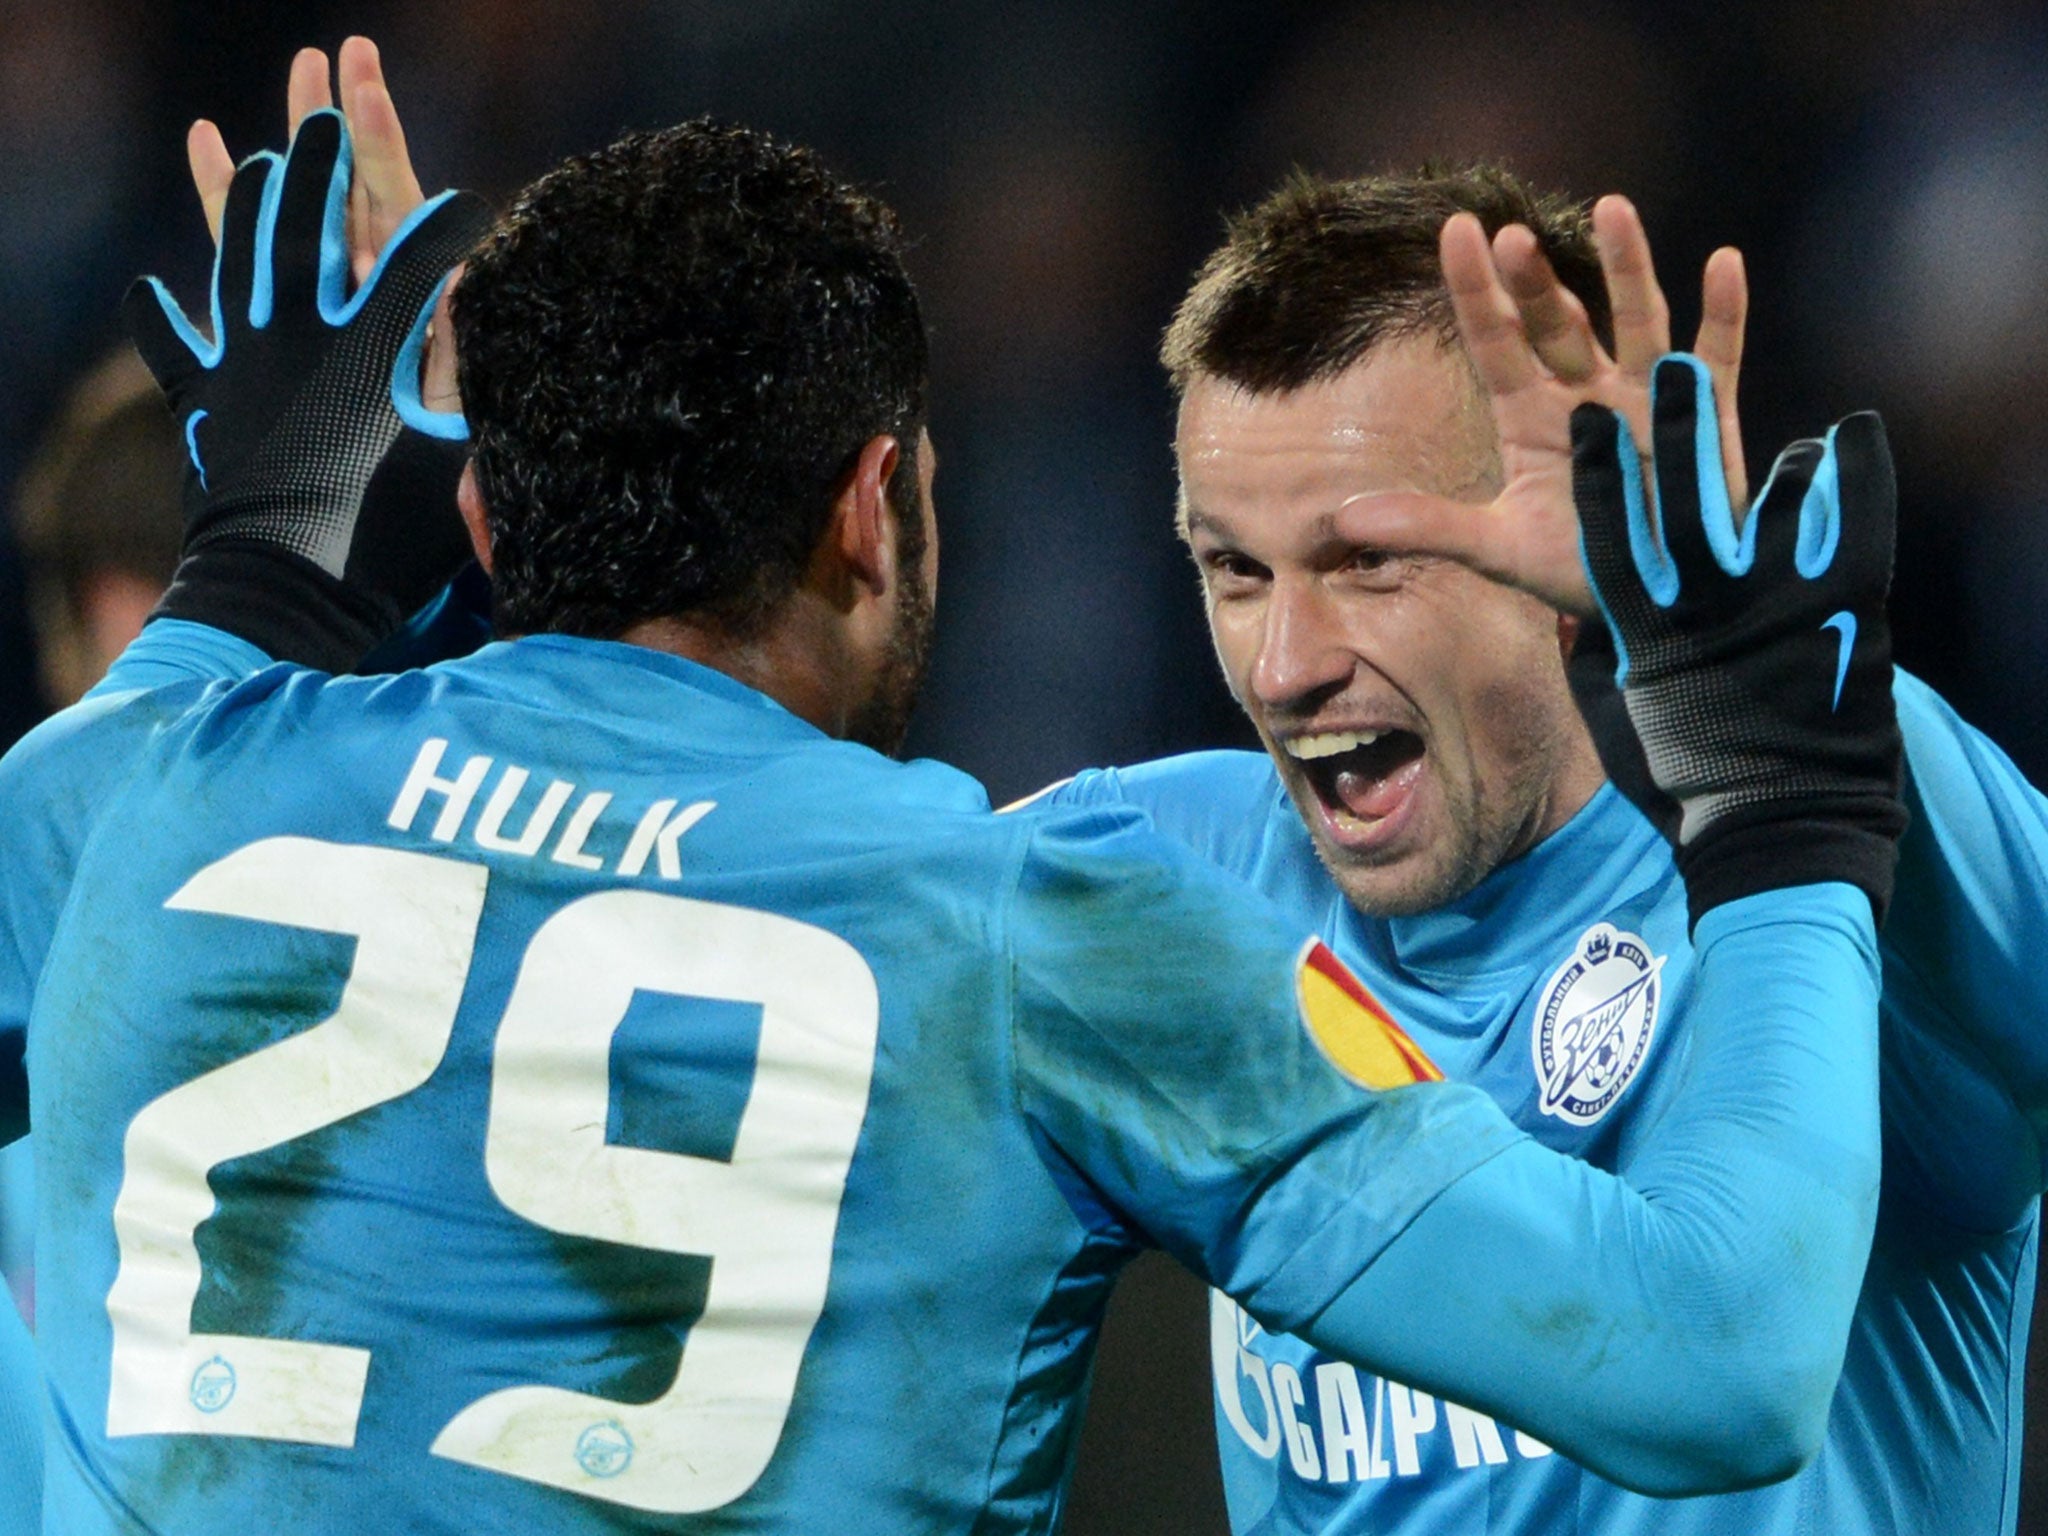 Hulk and Sergei Semak celebrate after scoring a goal